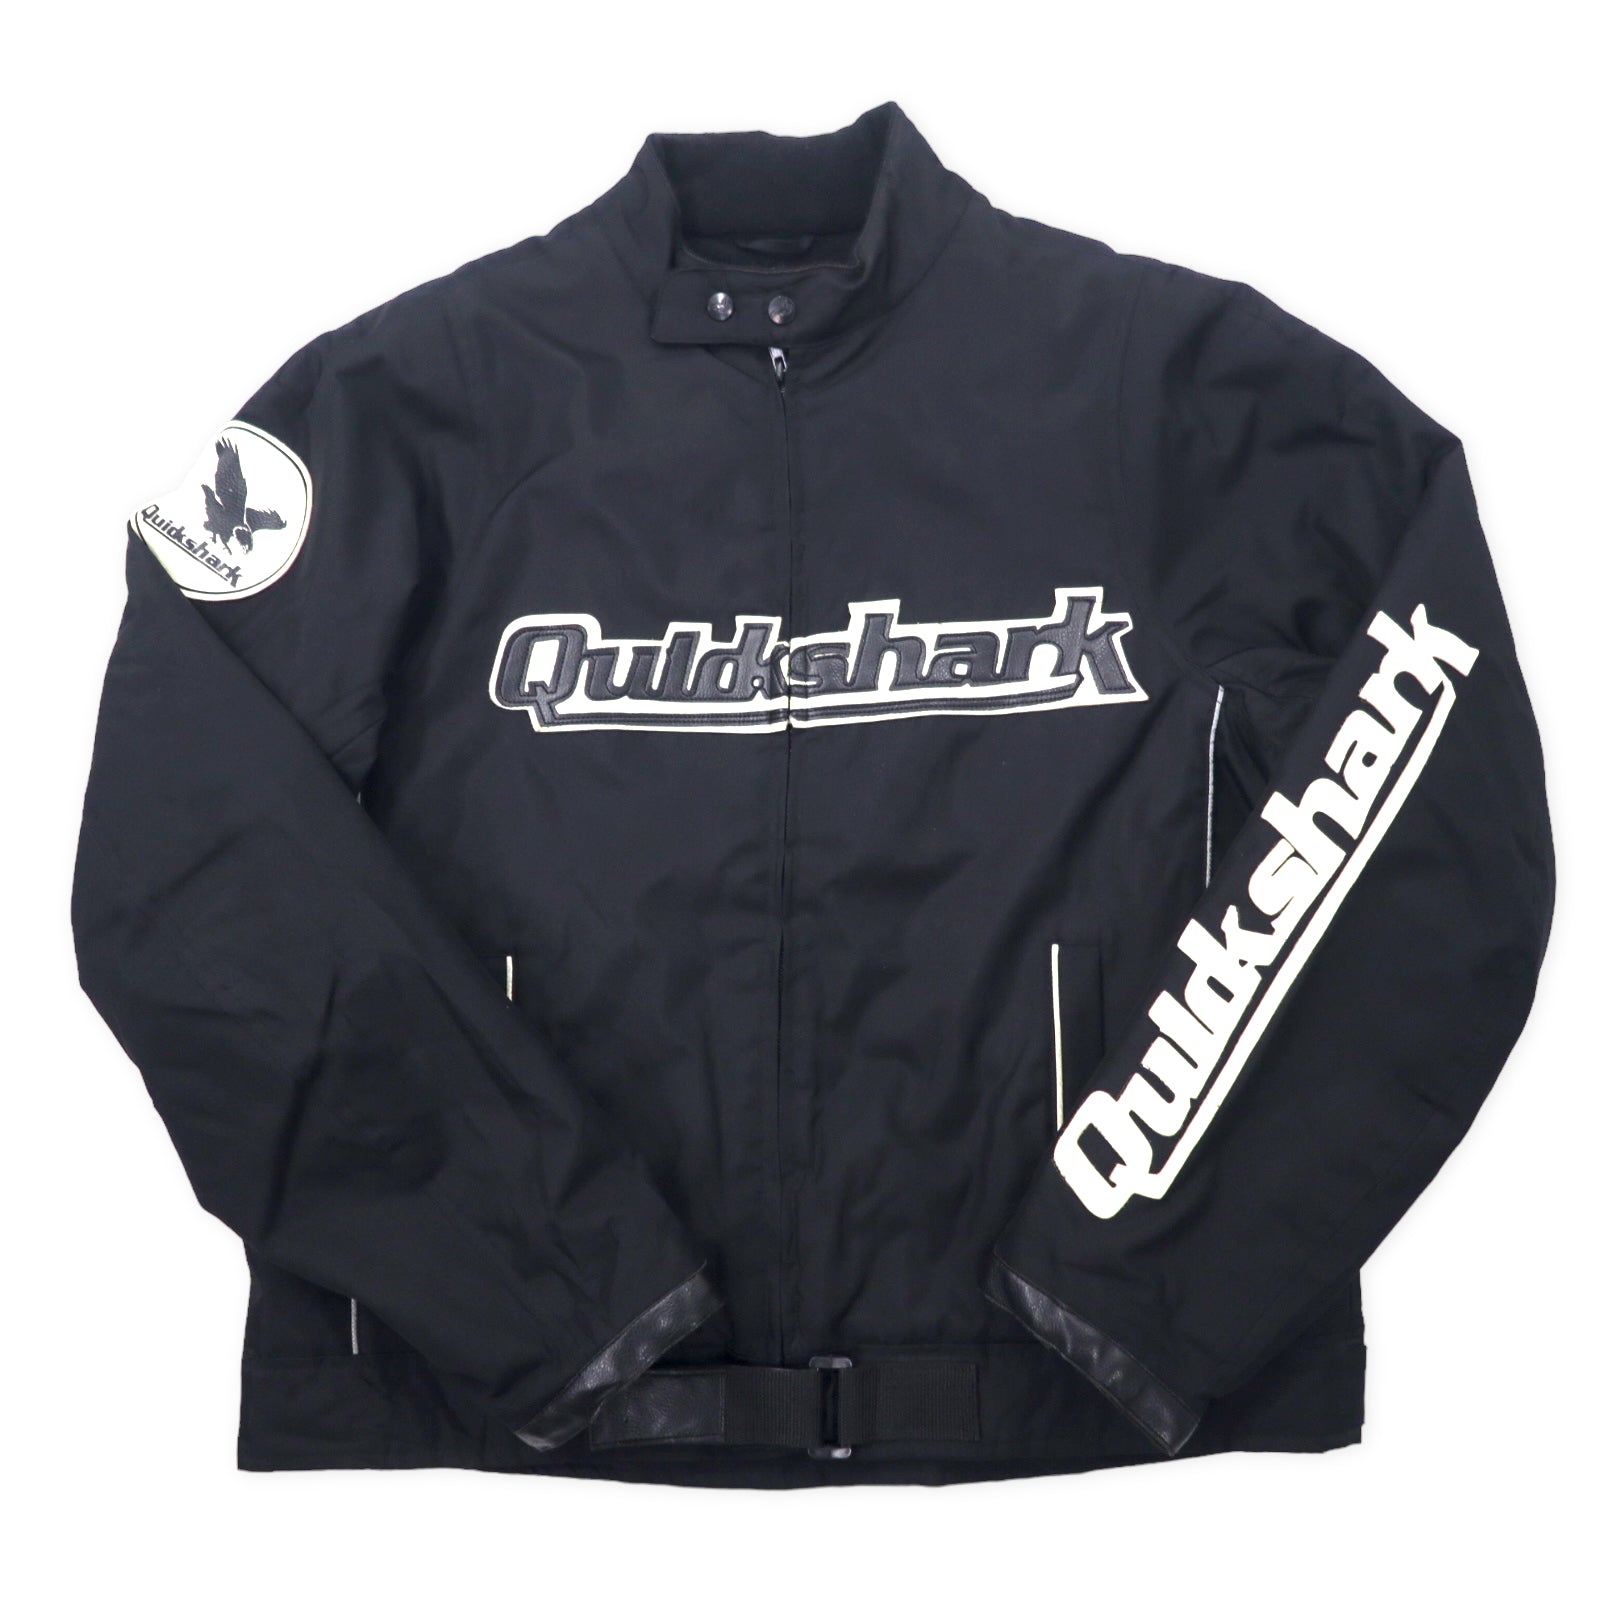 Quick Shark Racing Jacket Single Riders Jacket XL Black Polyester